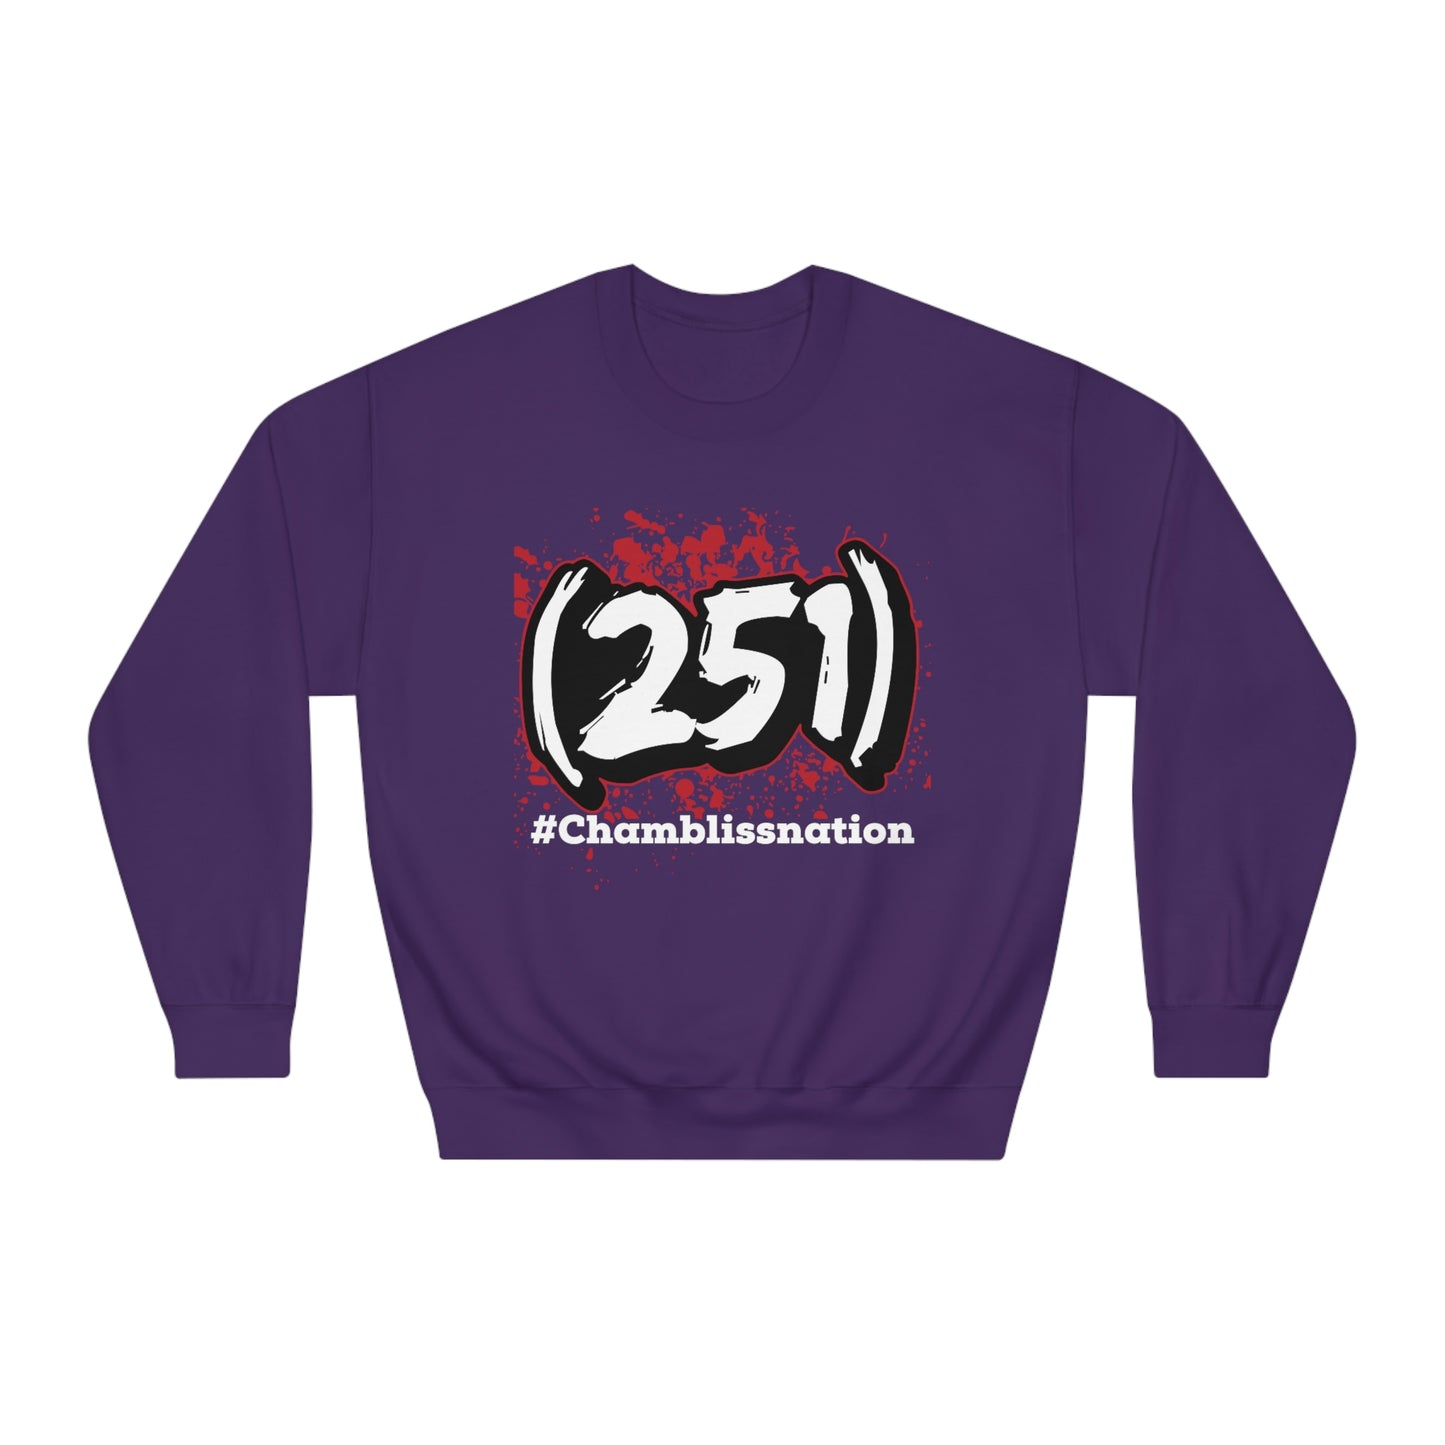 Area Code 251 Sweatshirt